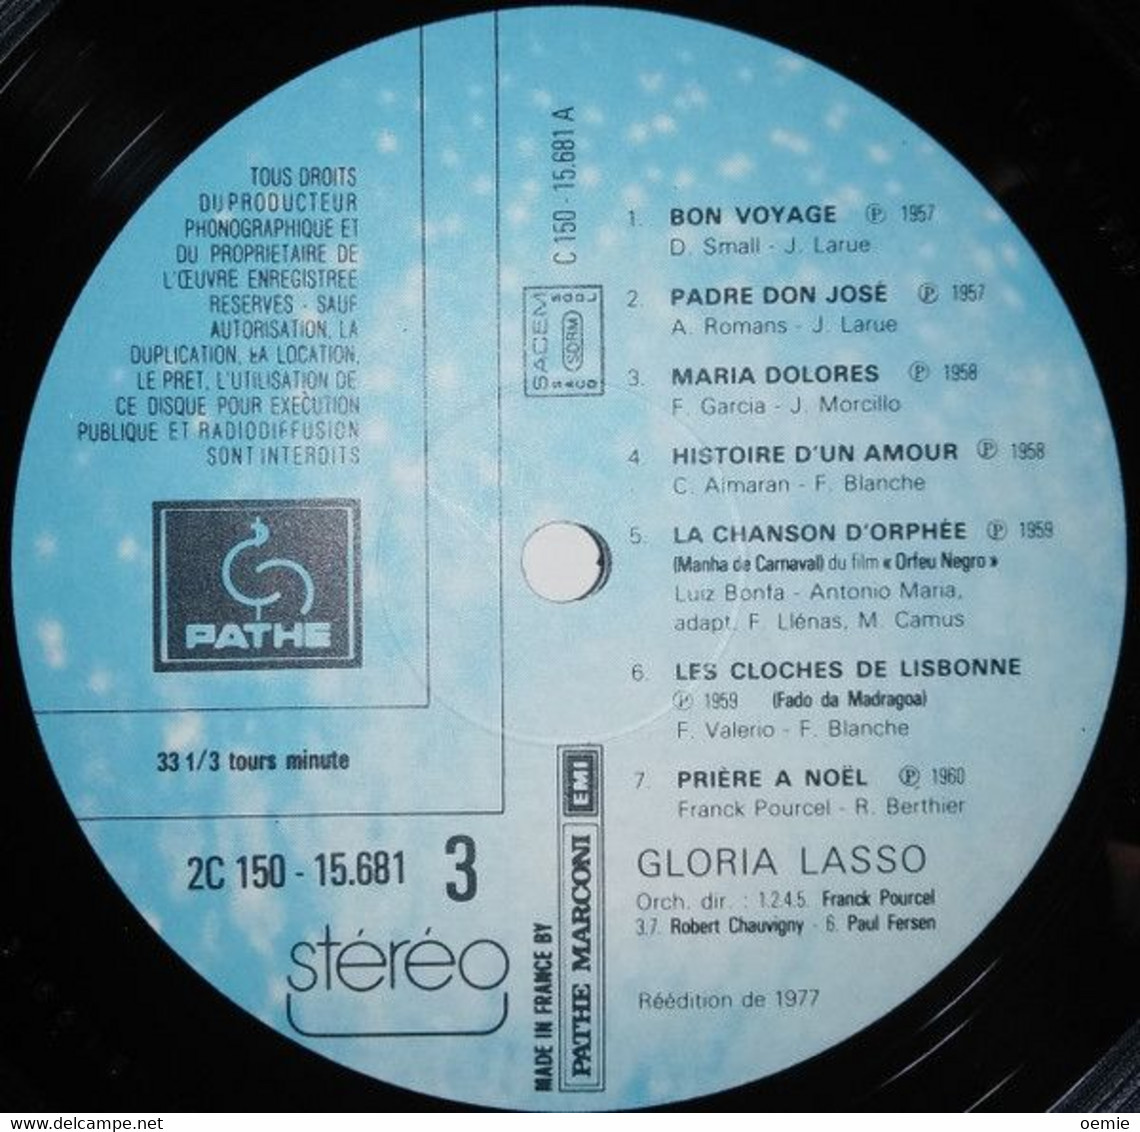 GLORIA  LASSO  °   ALBUM  DOUBLE - Autres - Musique Espagnole